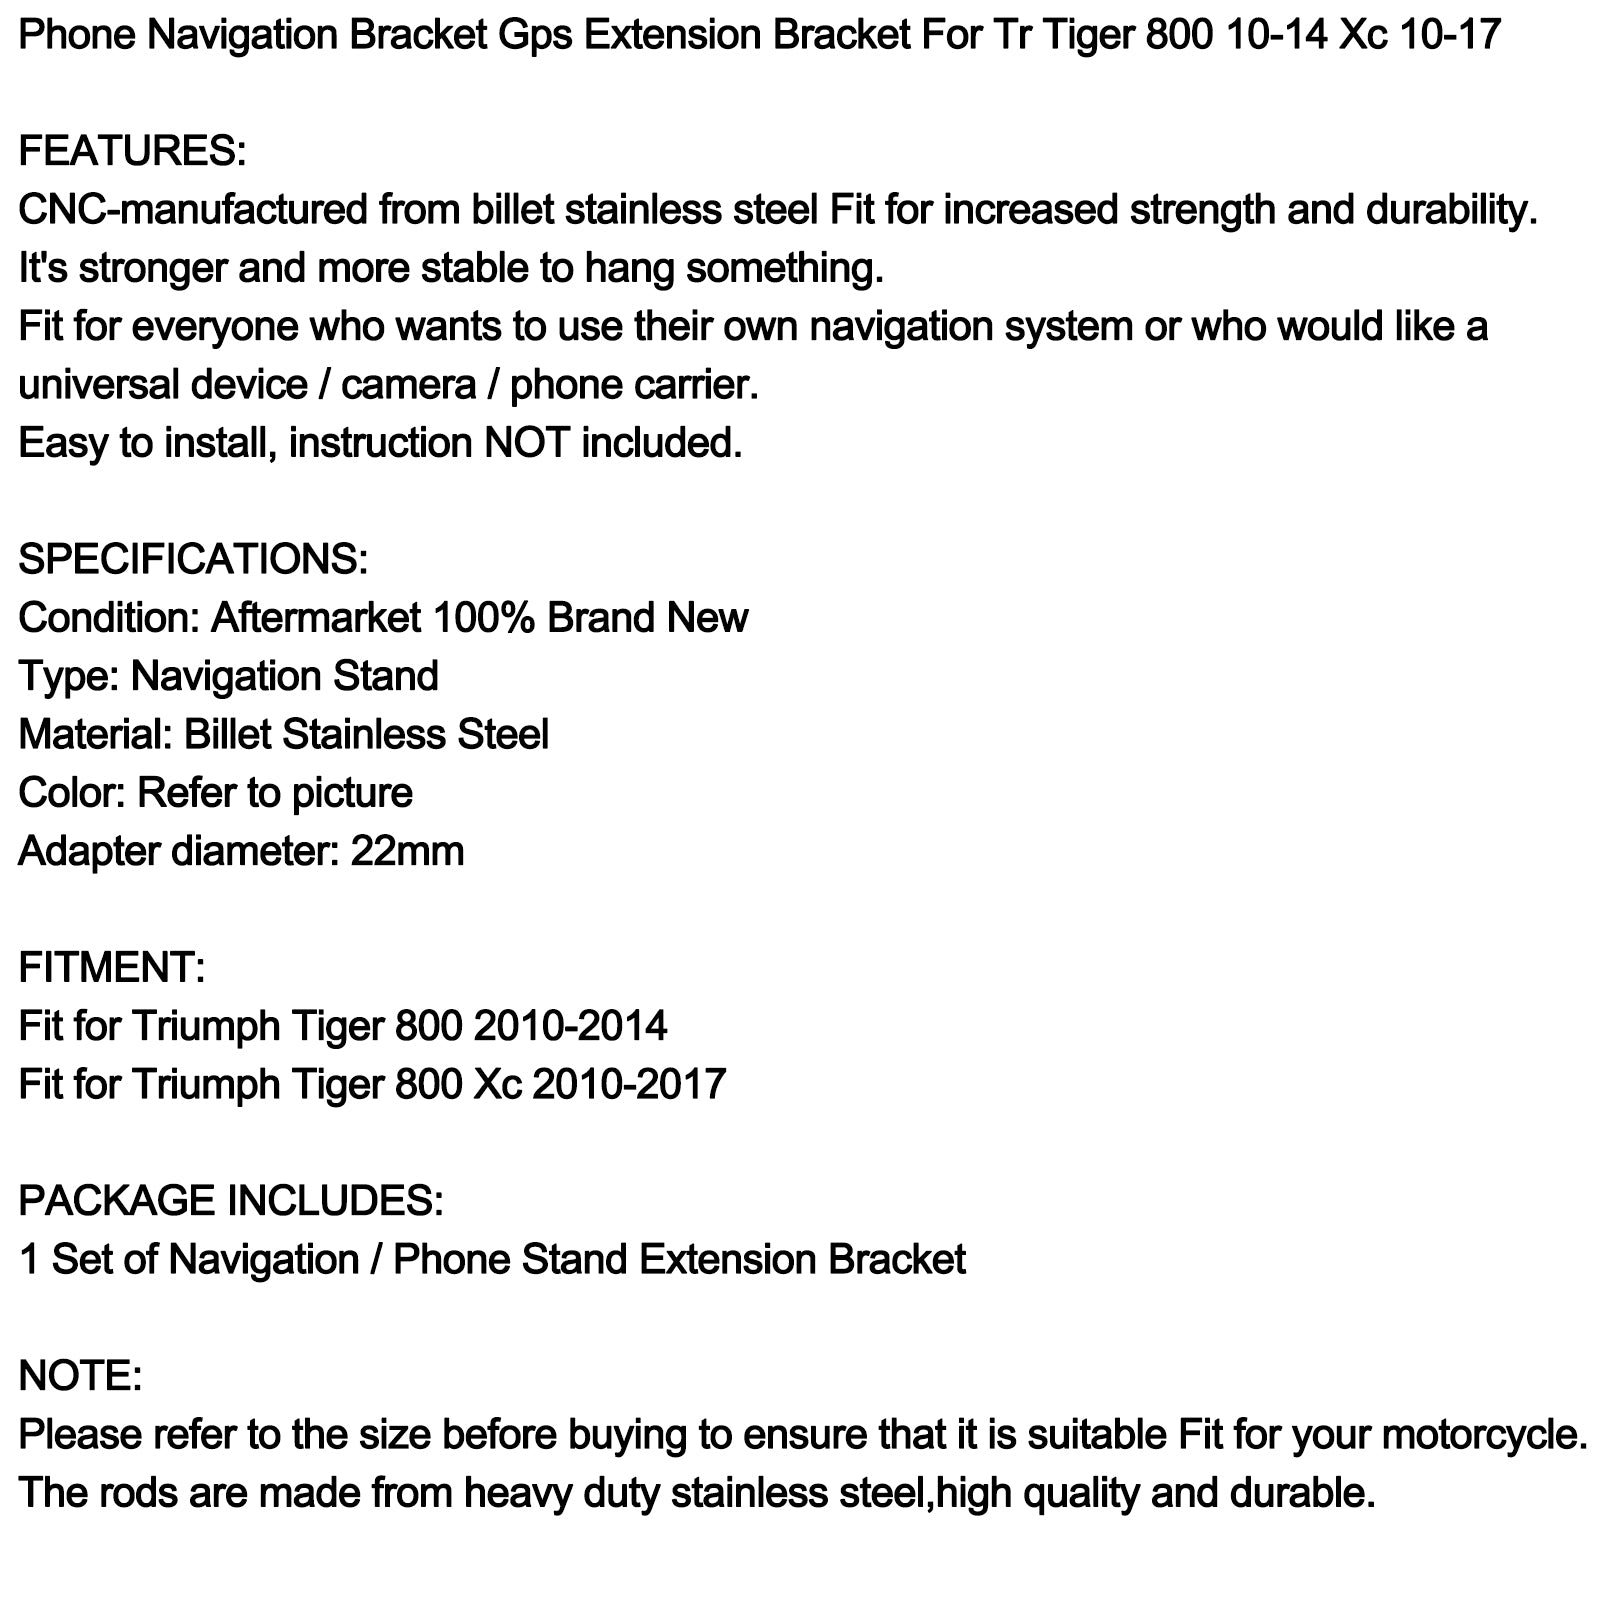 Gps Extension Bracket Phone Navi Bracket Fits For Tr Tiger 800 10-14 Xc 10-17 Generic